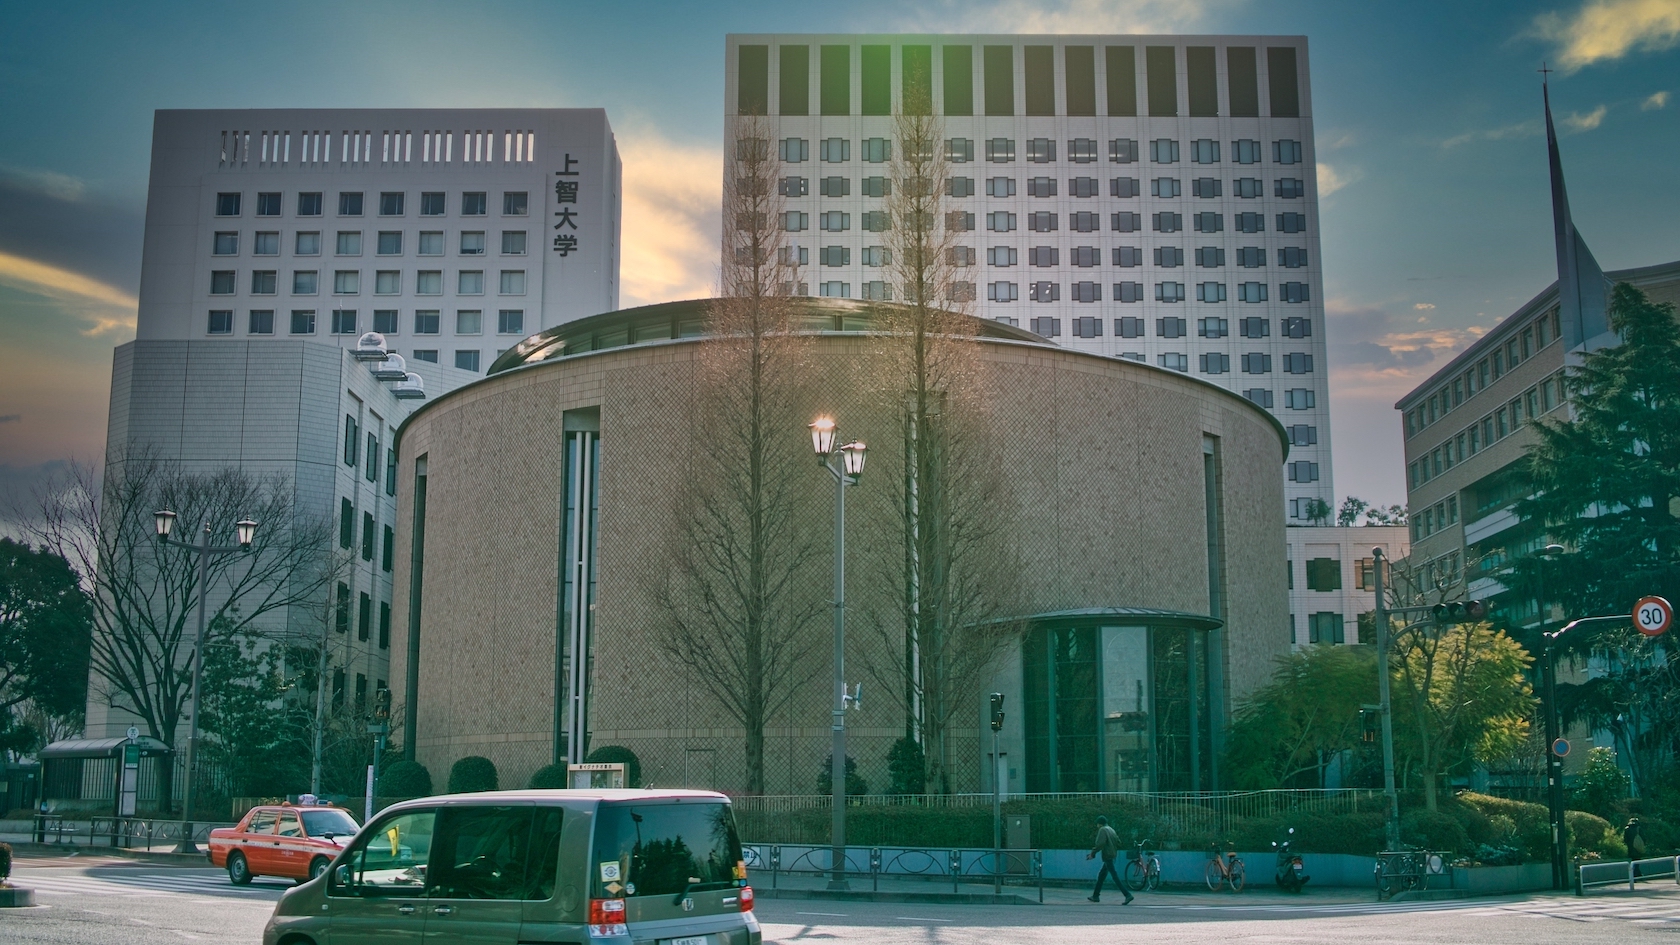 Sophia University, Tokyo, Japan. Photo by Keiichi Yasu on Flickr.